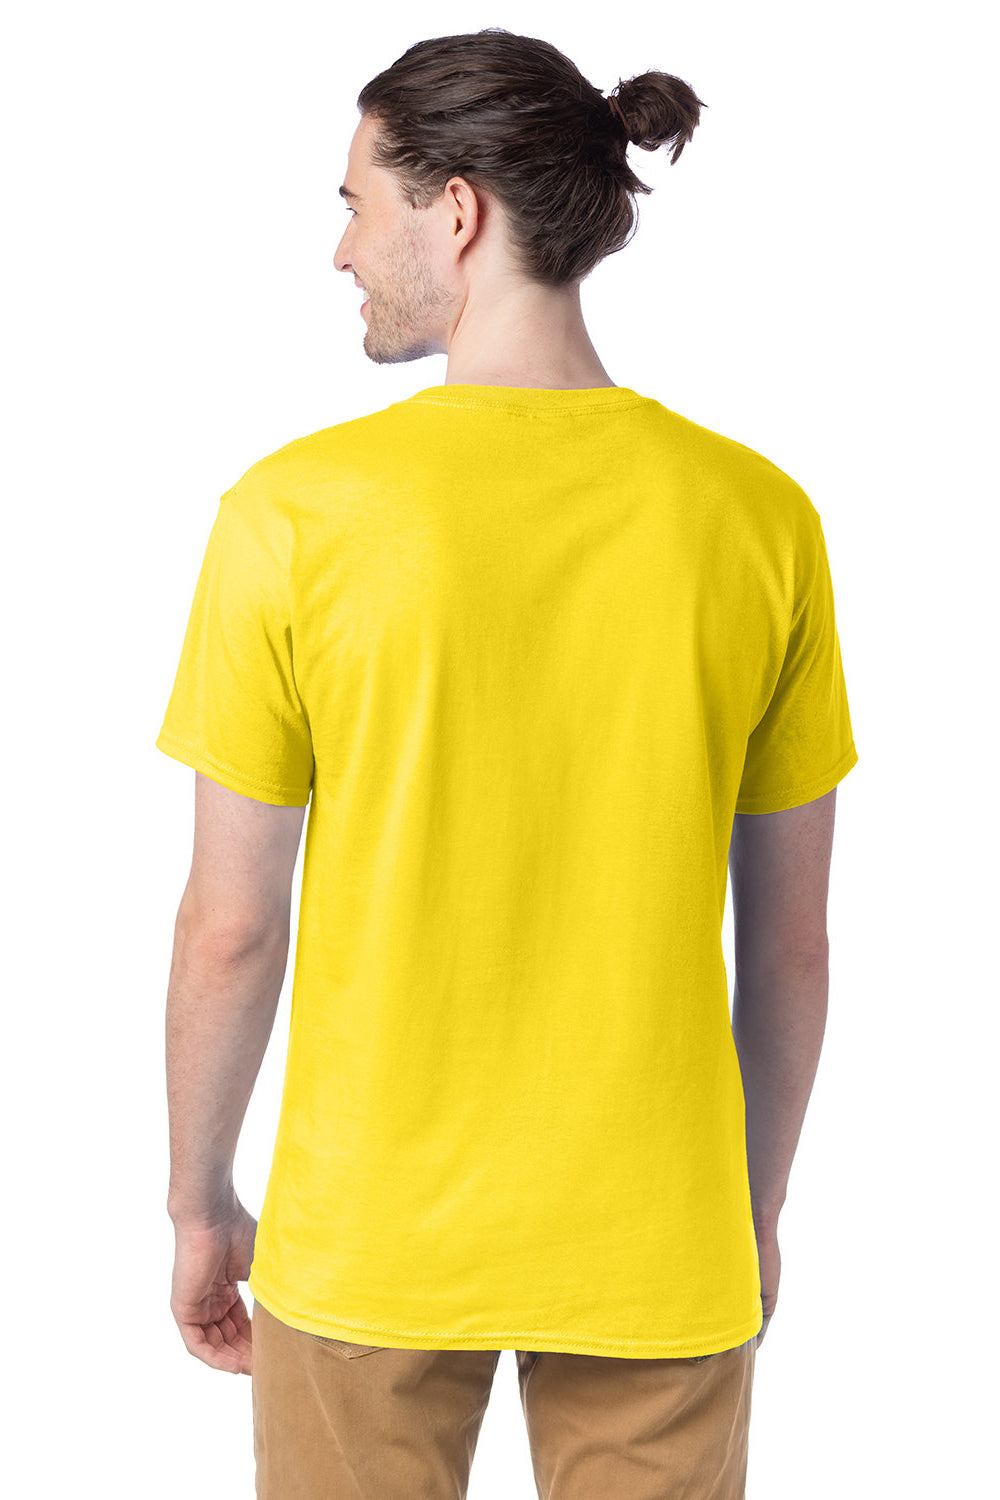 Hanes 5280 Mens ComfortSoft Short Sleeve Crewneck T-Shirt Athletic Yellow Back